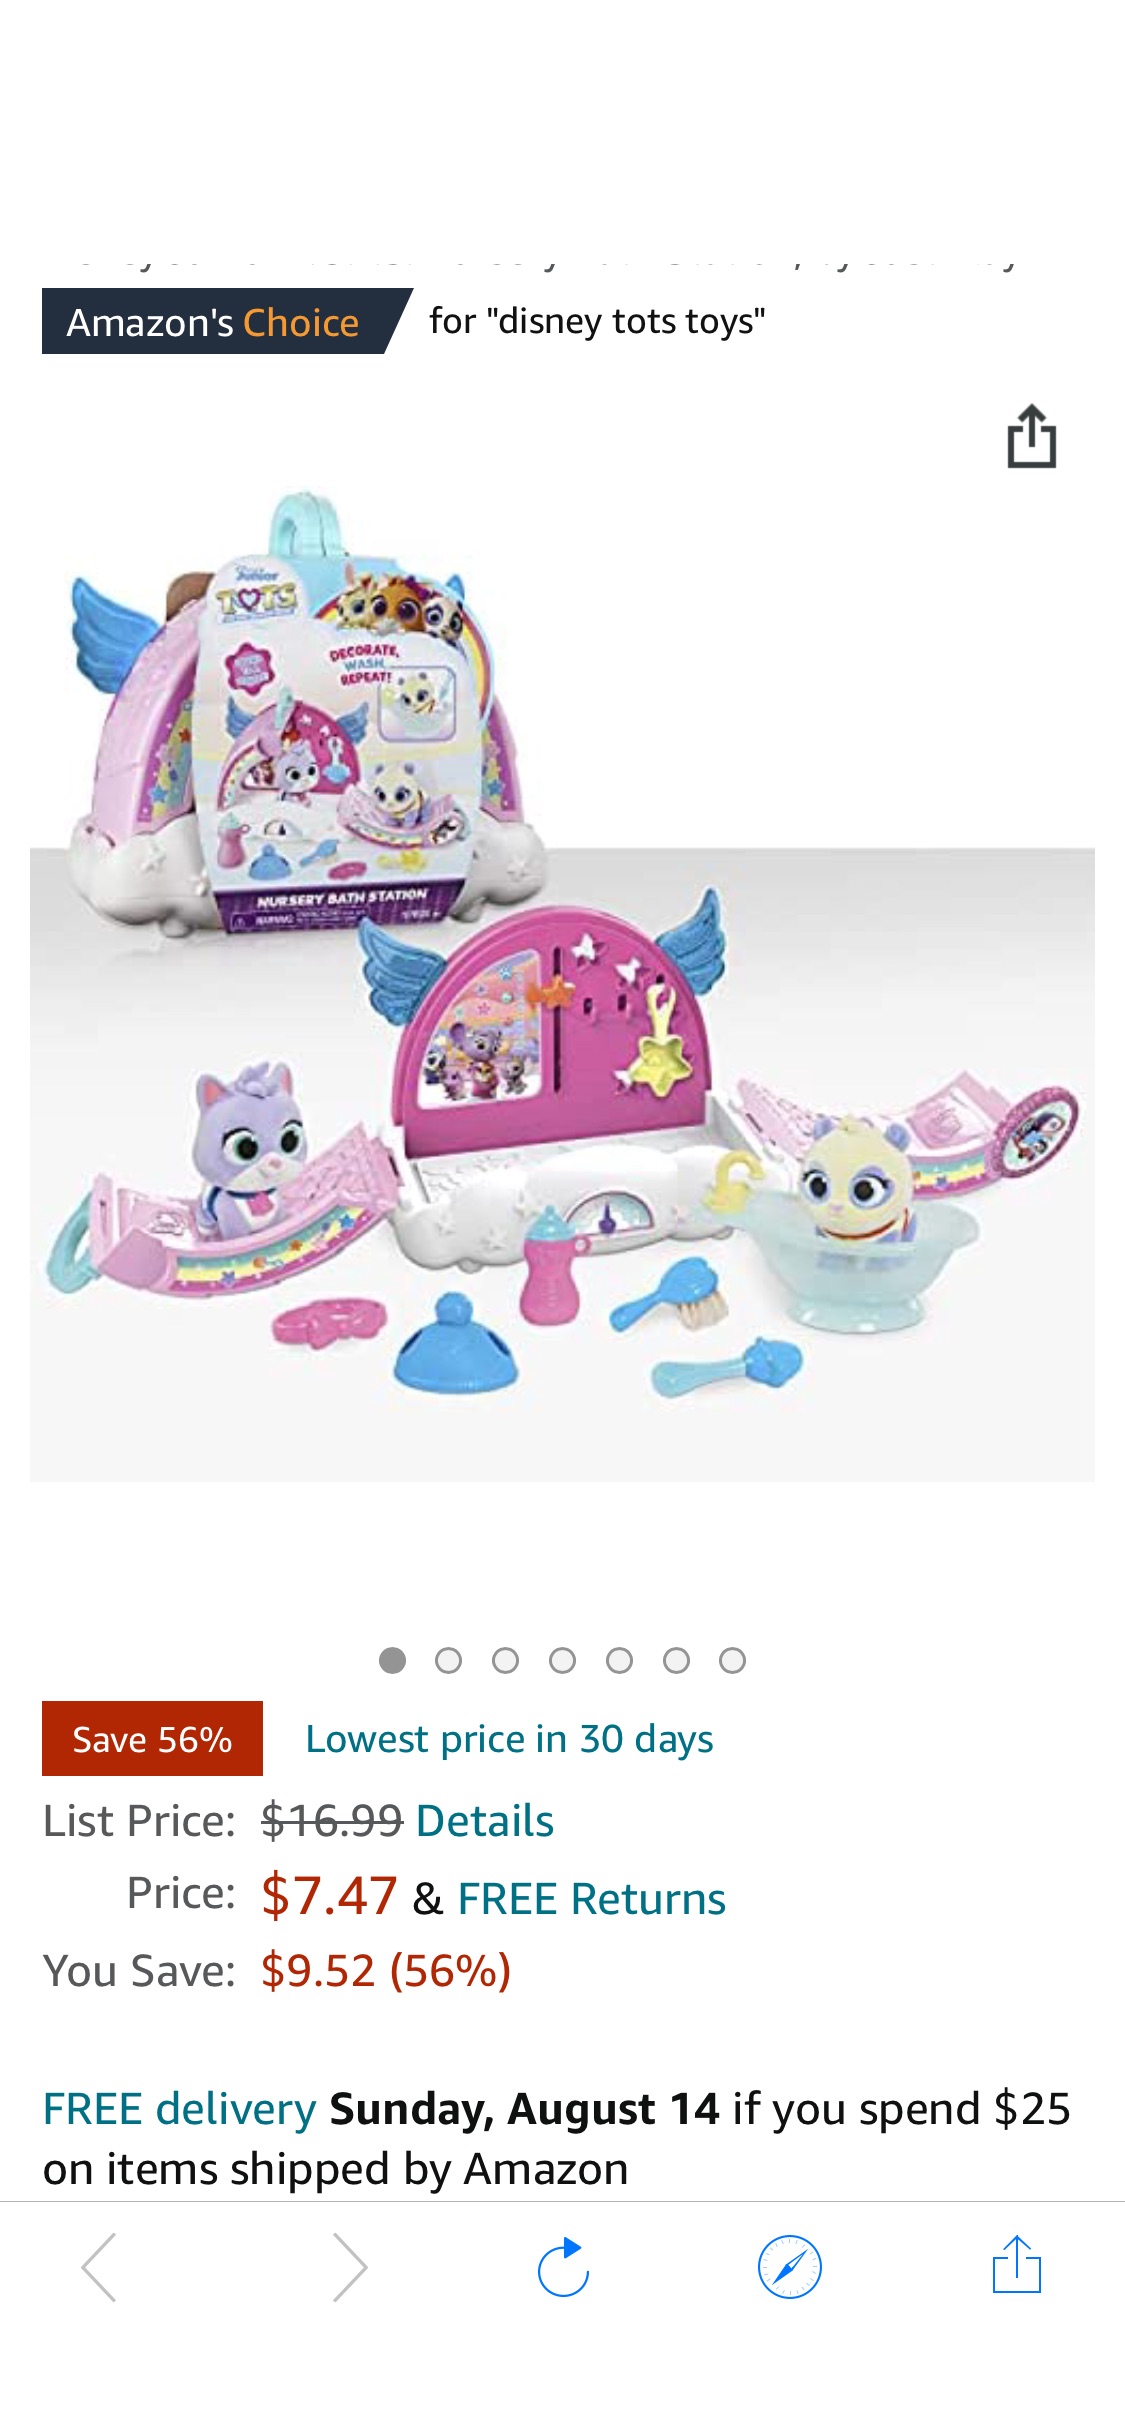 Amazon.com: Disney Junior T.O.T.S. Nursery Bath Station, by Just Play : Toys & Games